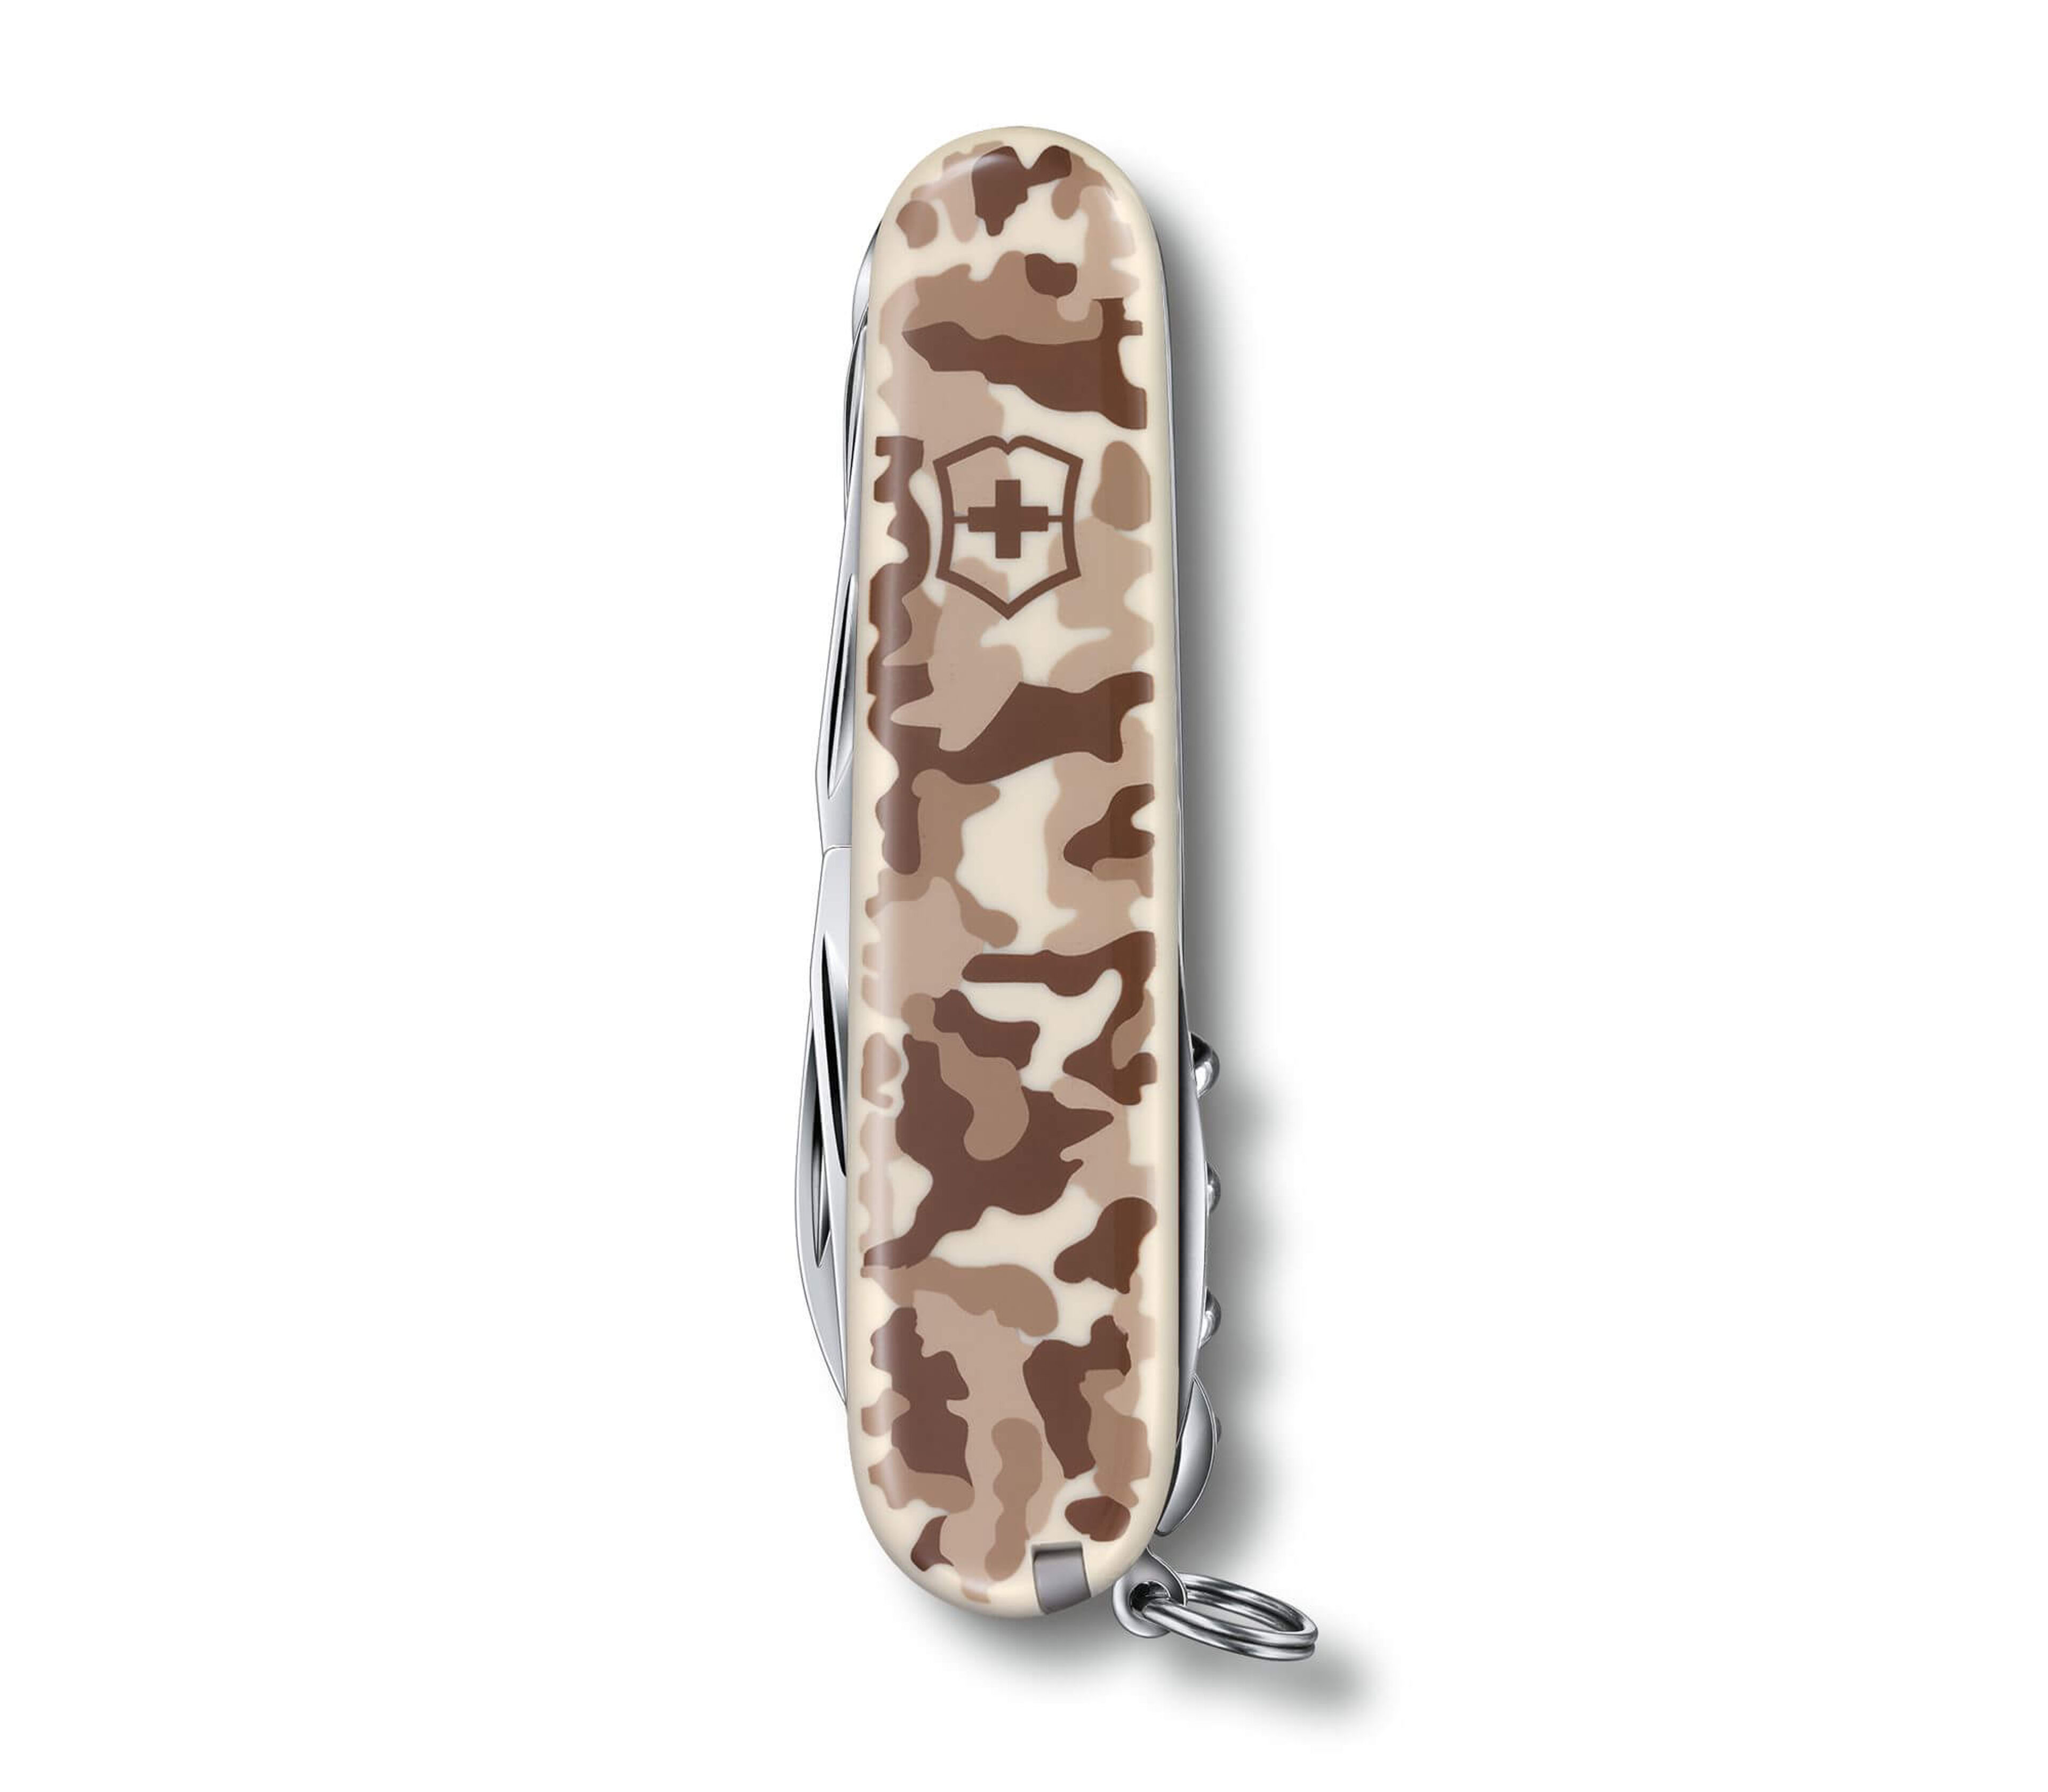 Victorinox Huntsman Swiss Army Pocket Knife - Desert Camouflage Camo